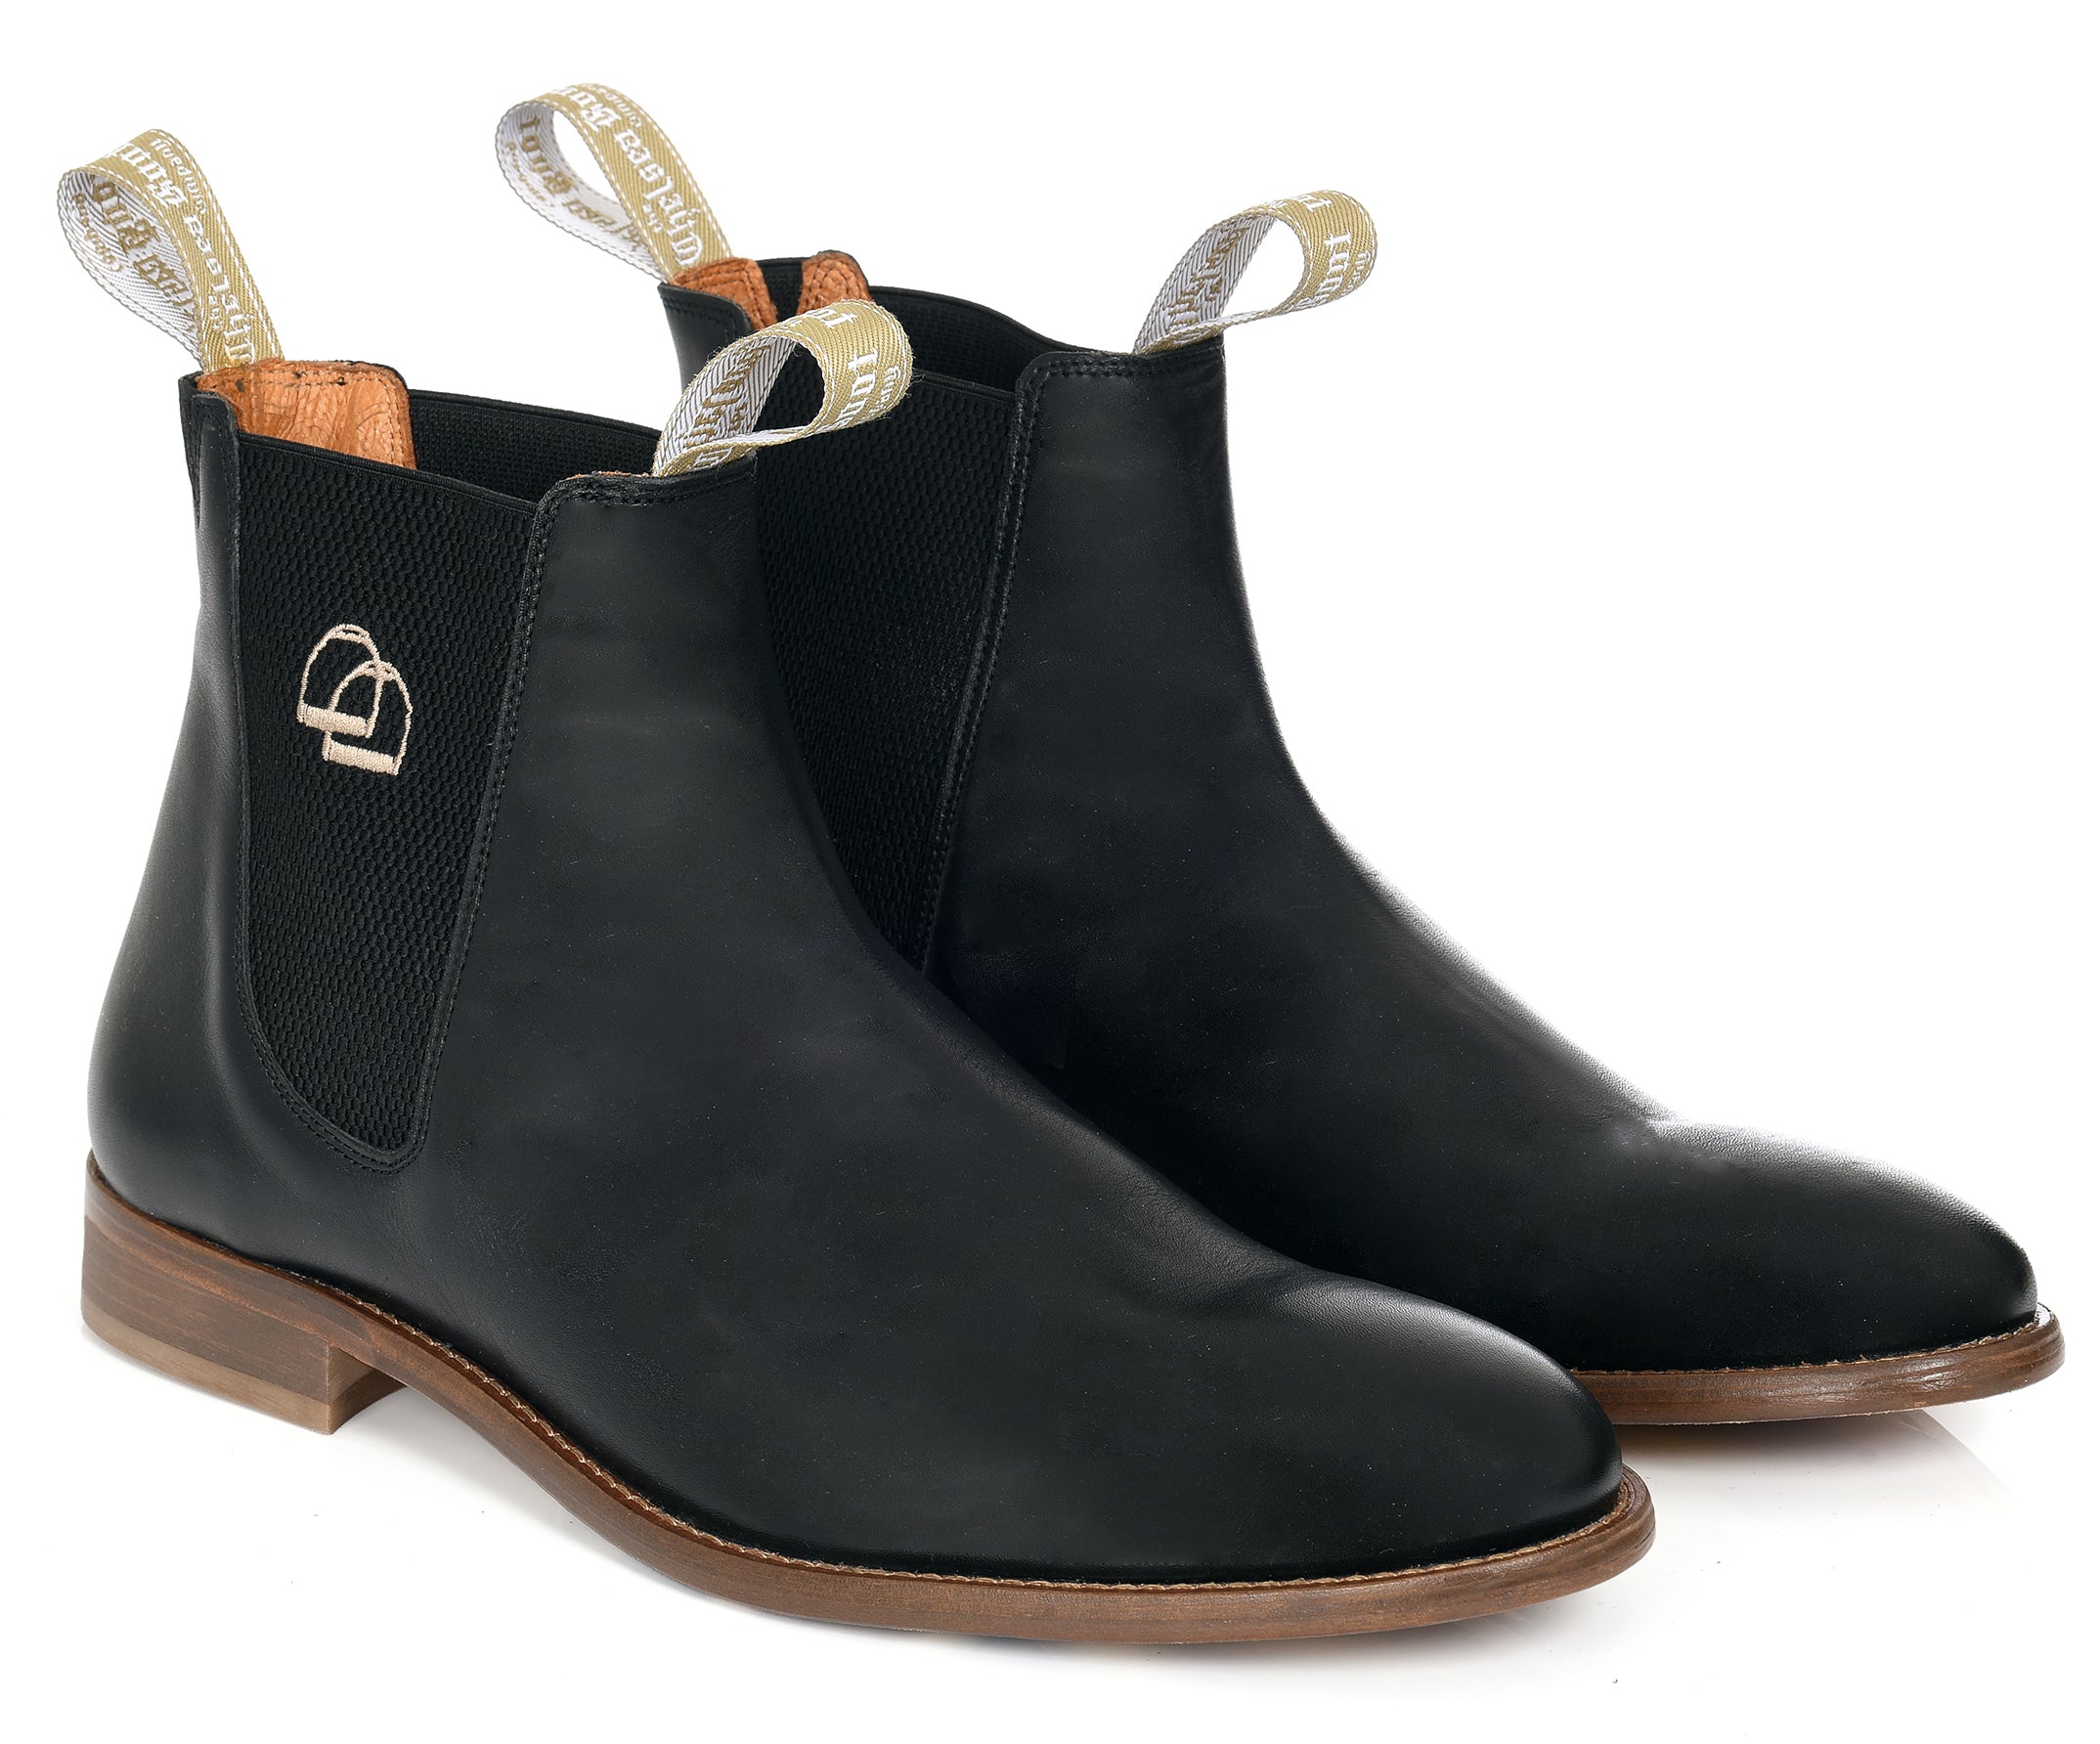 Men’s The Original Chelsea Boot - Black 8.5 Uk The Chelsea Boot Co Est. 1851